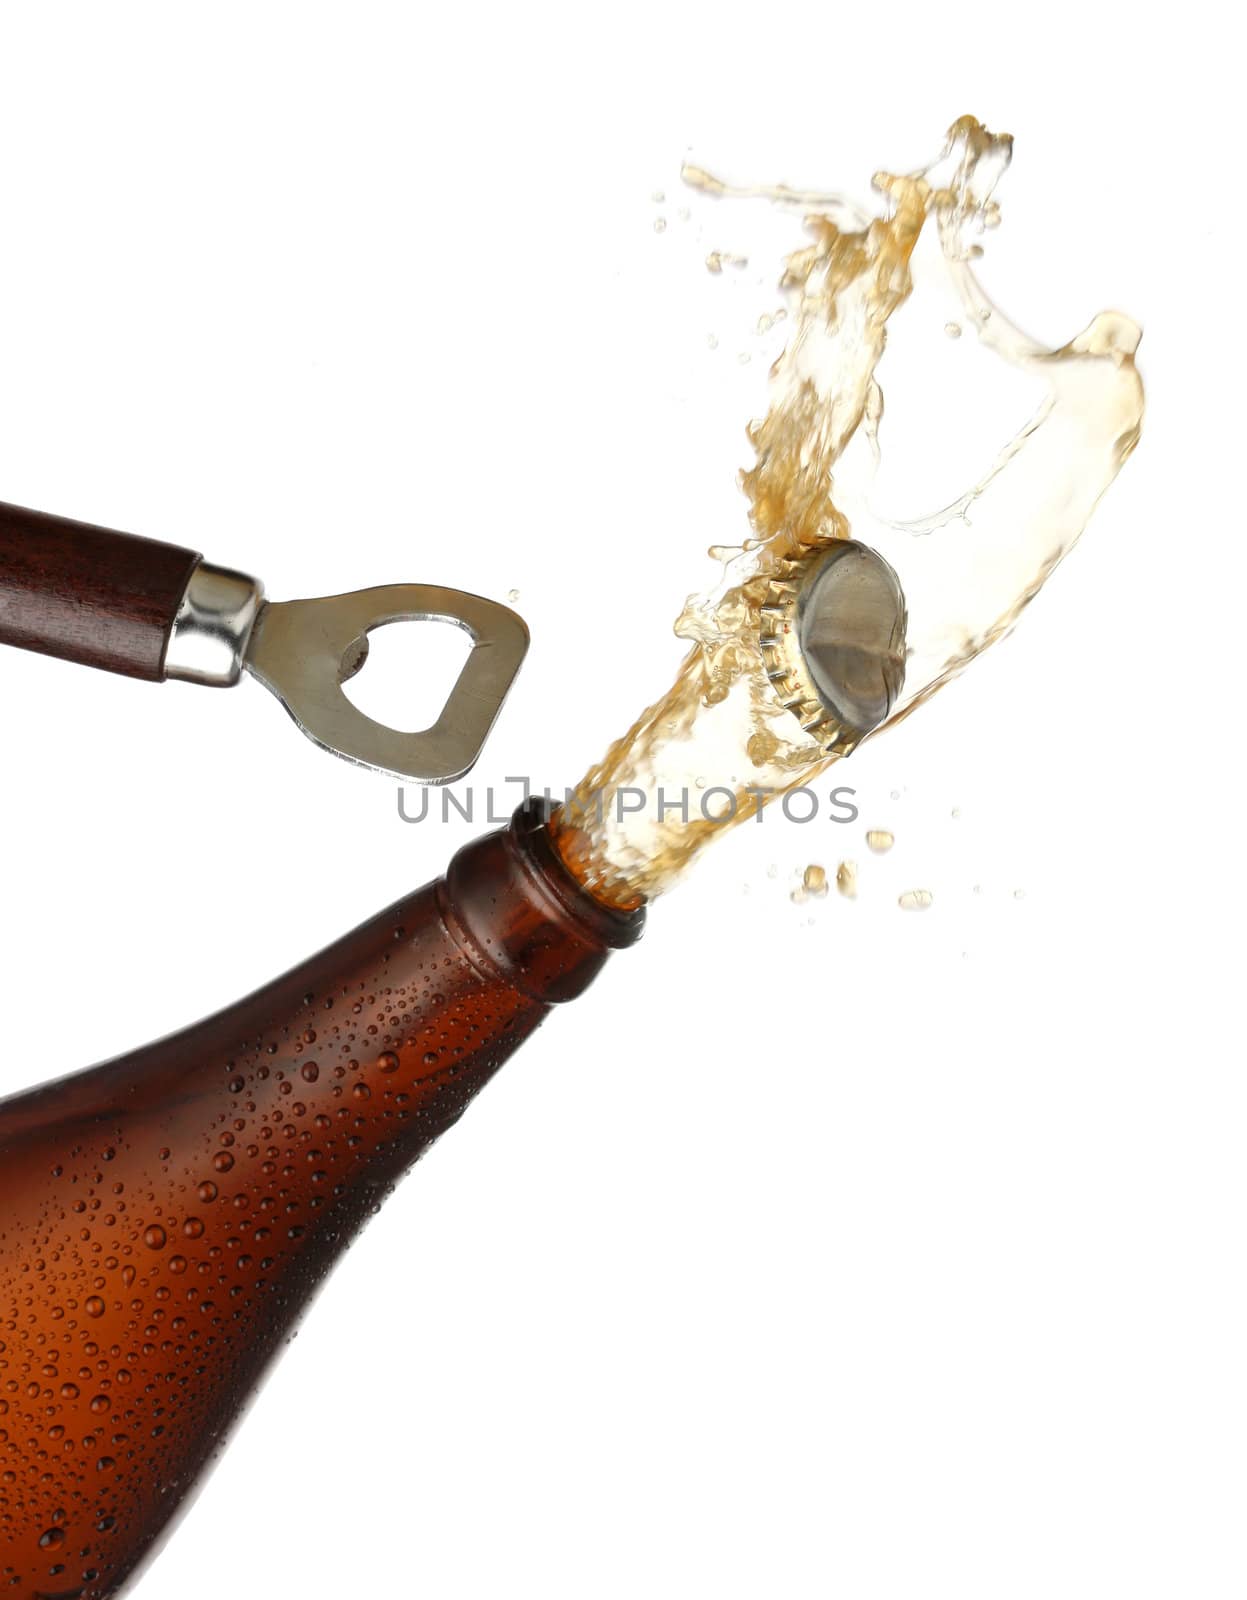 Opening a bottle of cold beer, splash image. White background